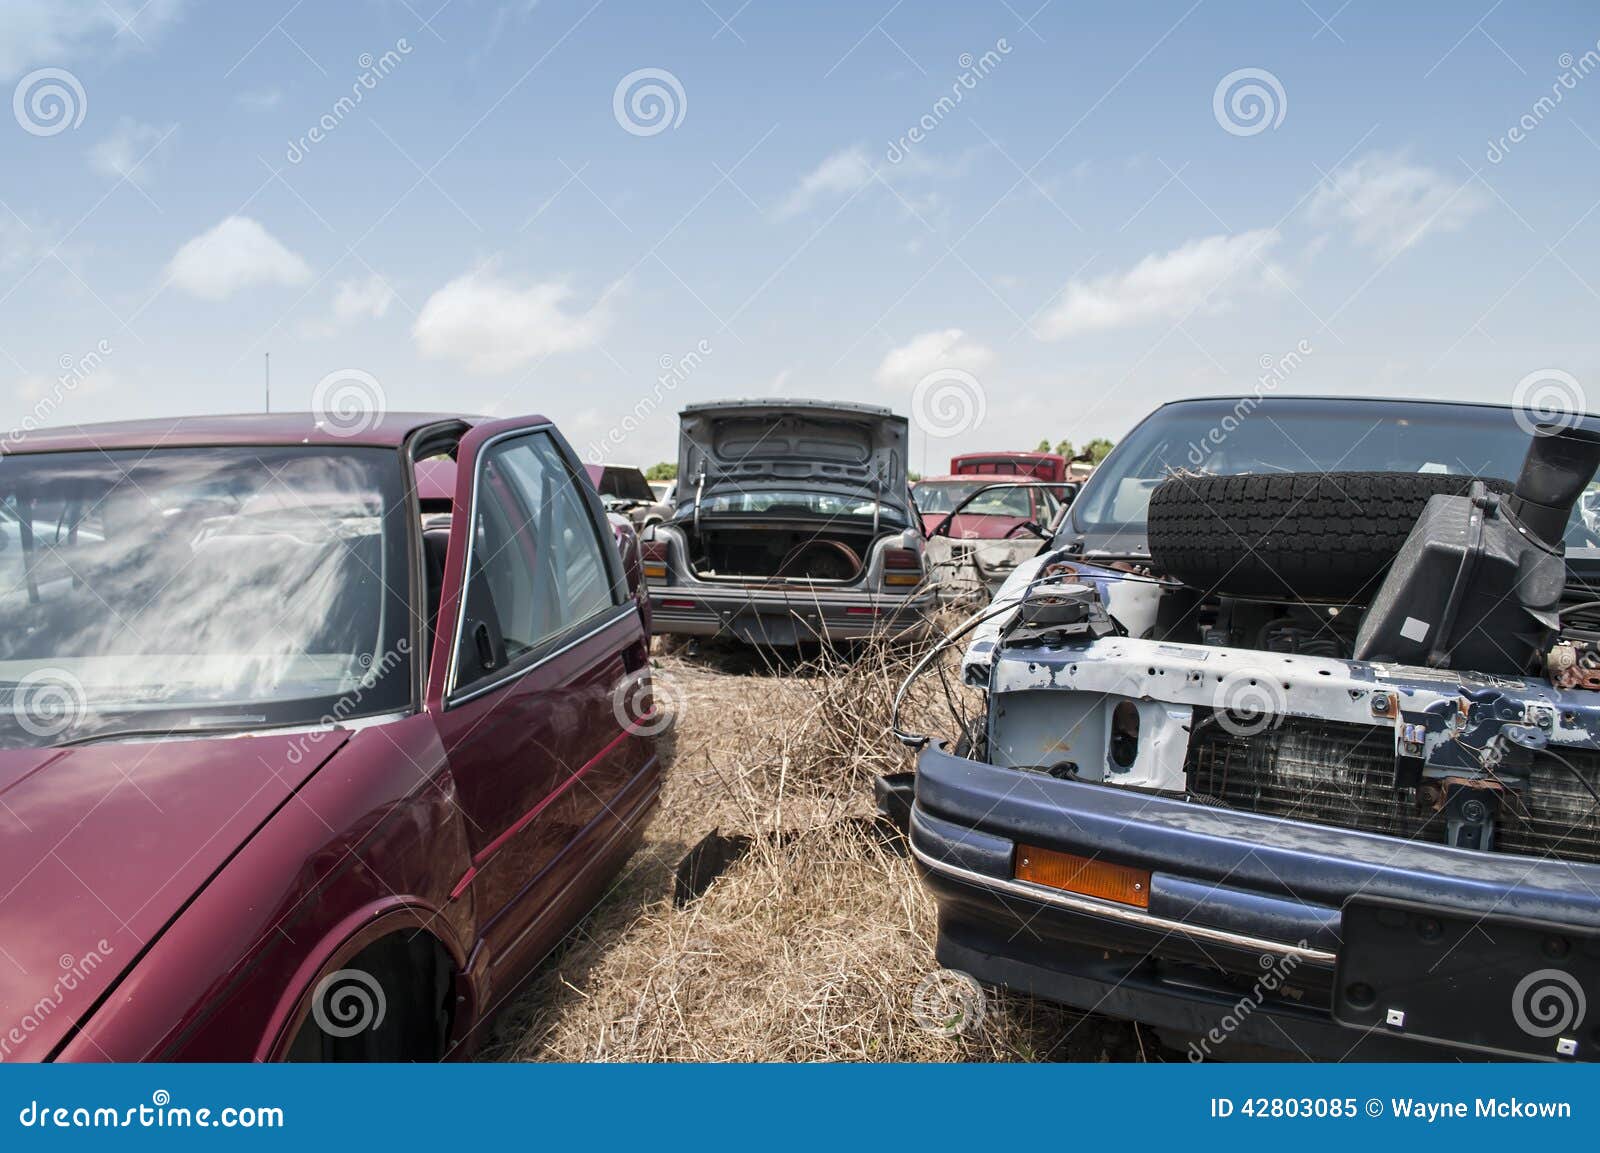 automobile-salvage-yard-junk-cars-blue-s